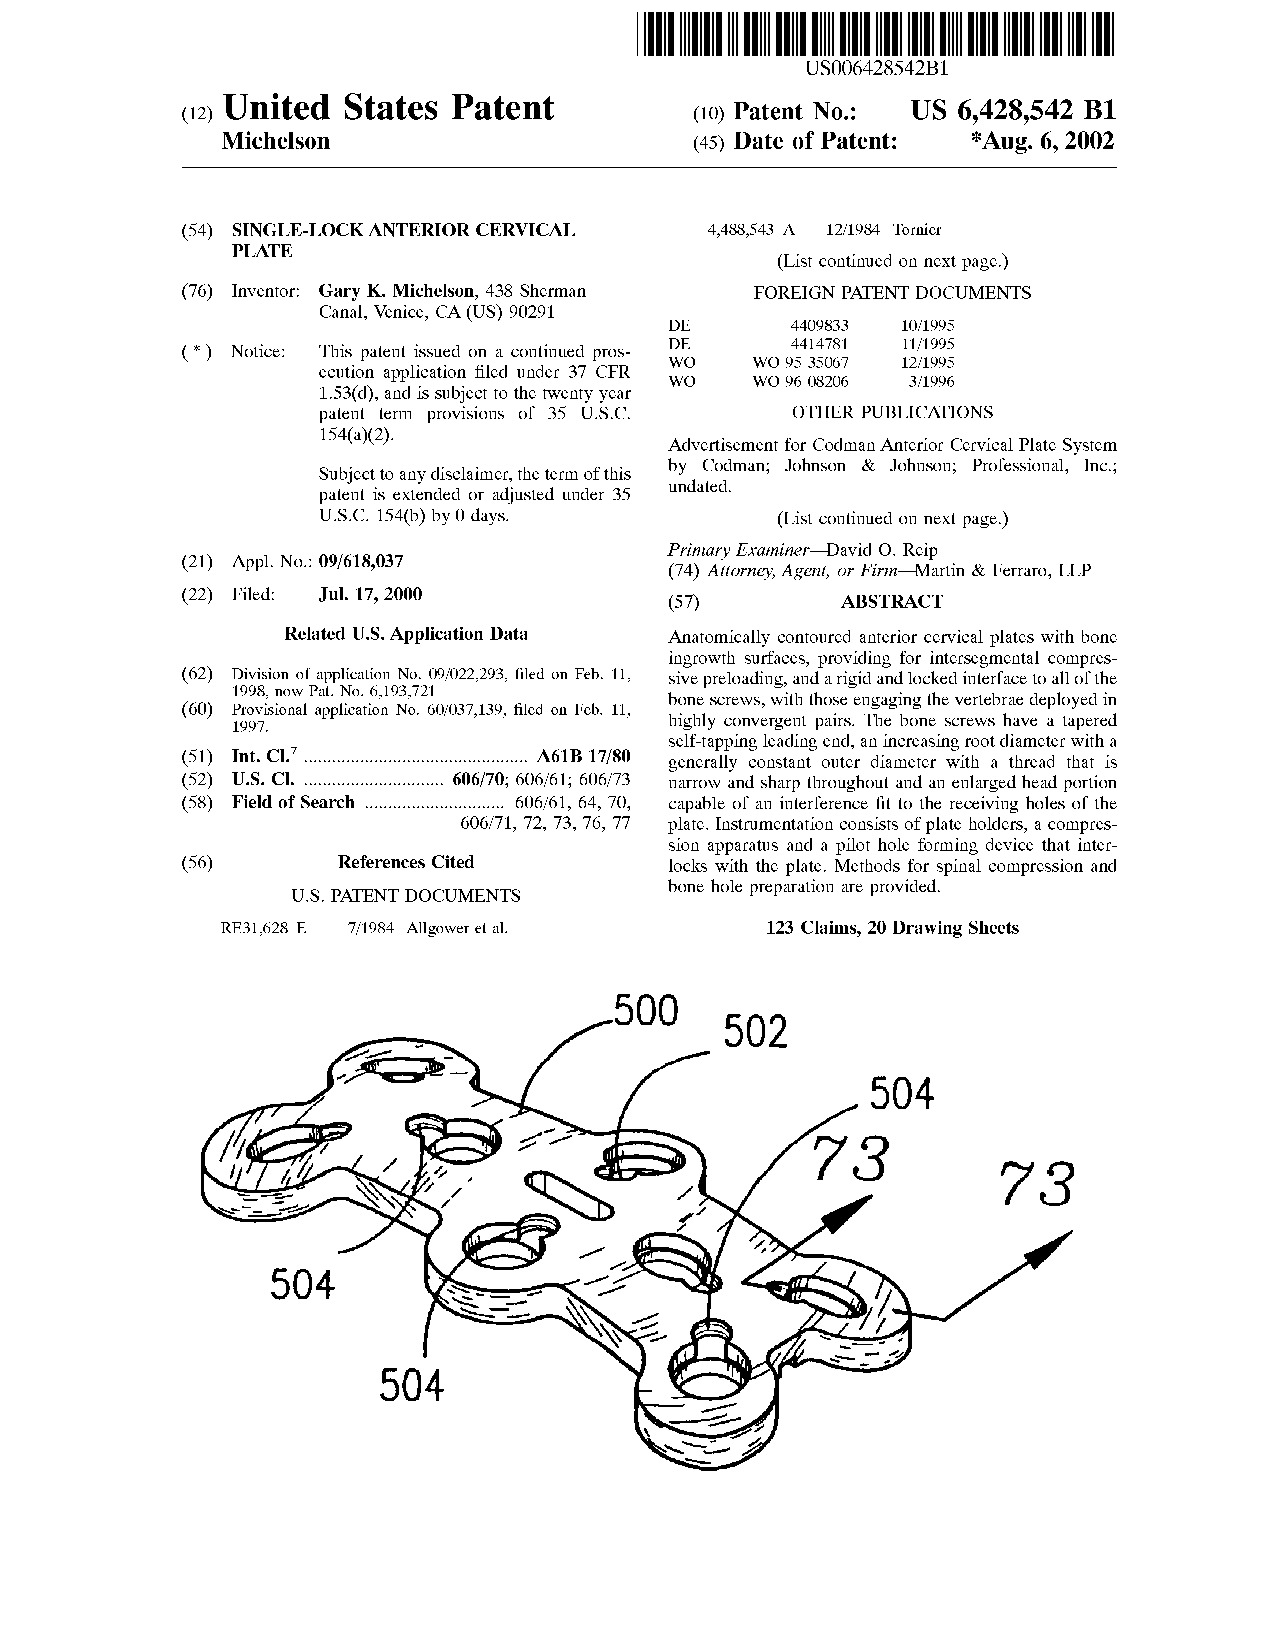 Single-lock anterior cervical plate - Patent 6,428,542